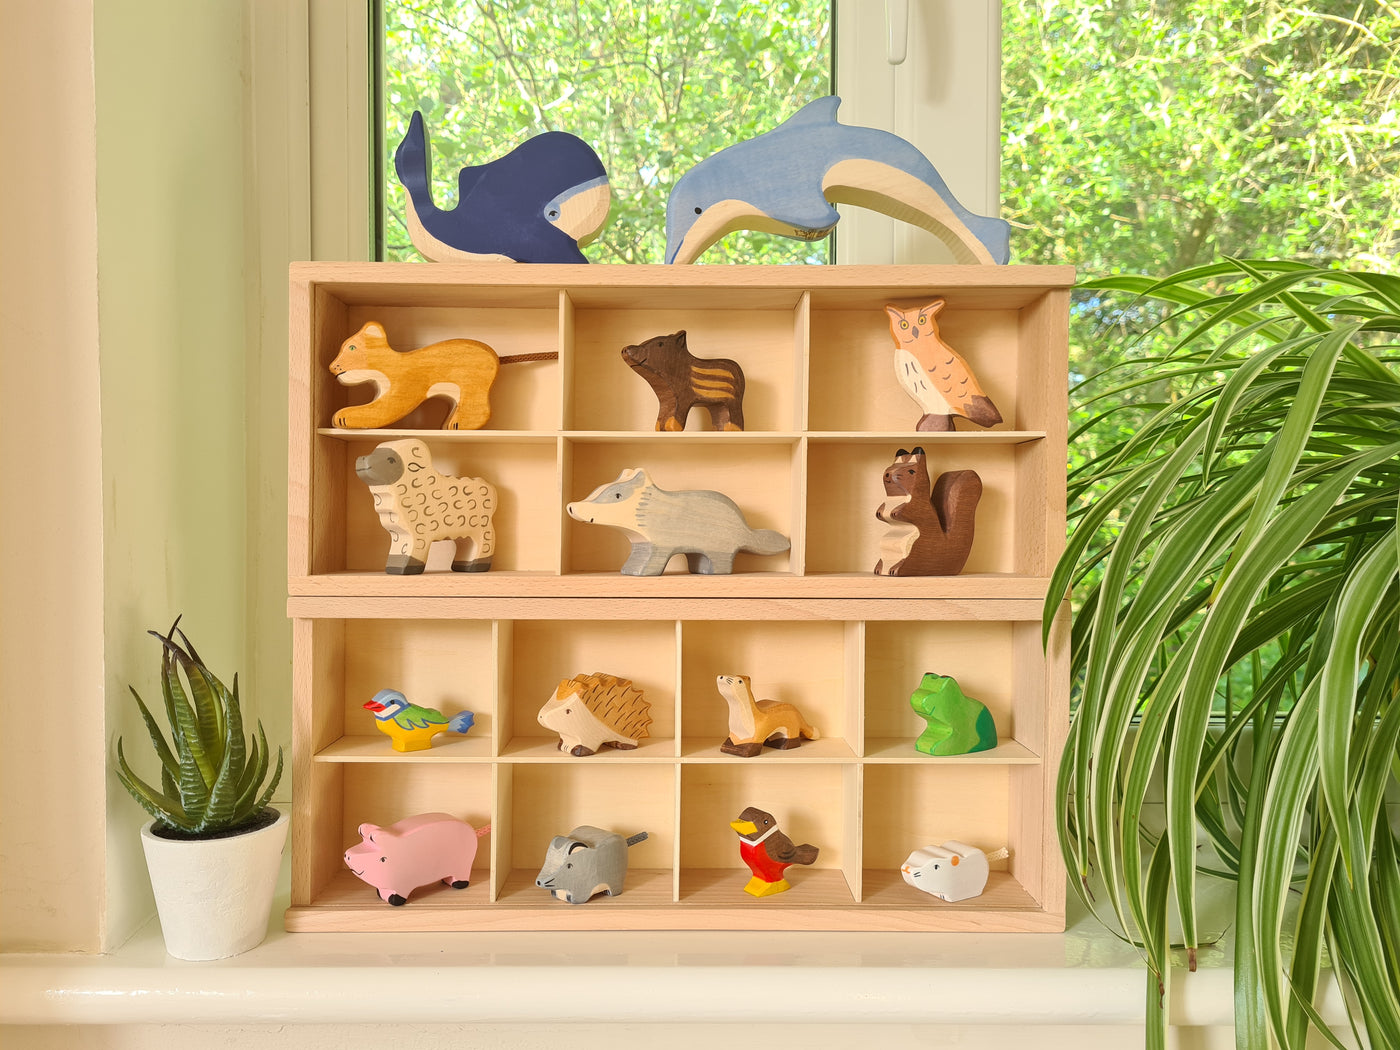 Wooden animal toys